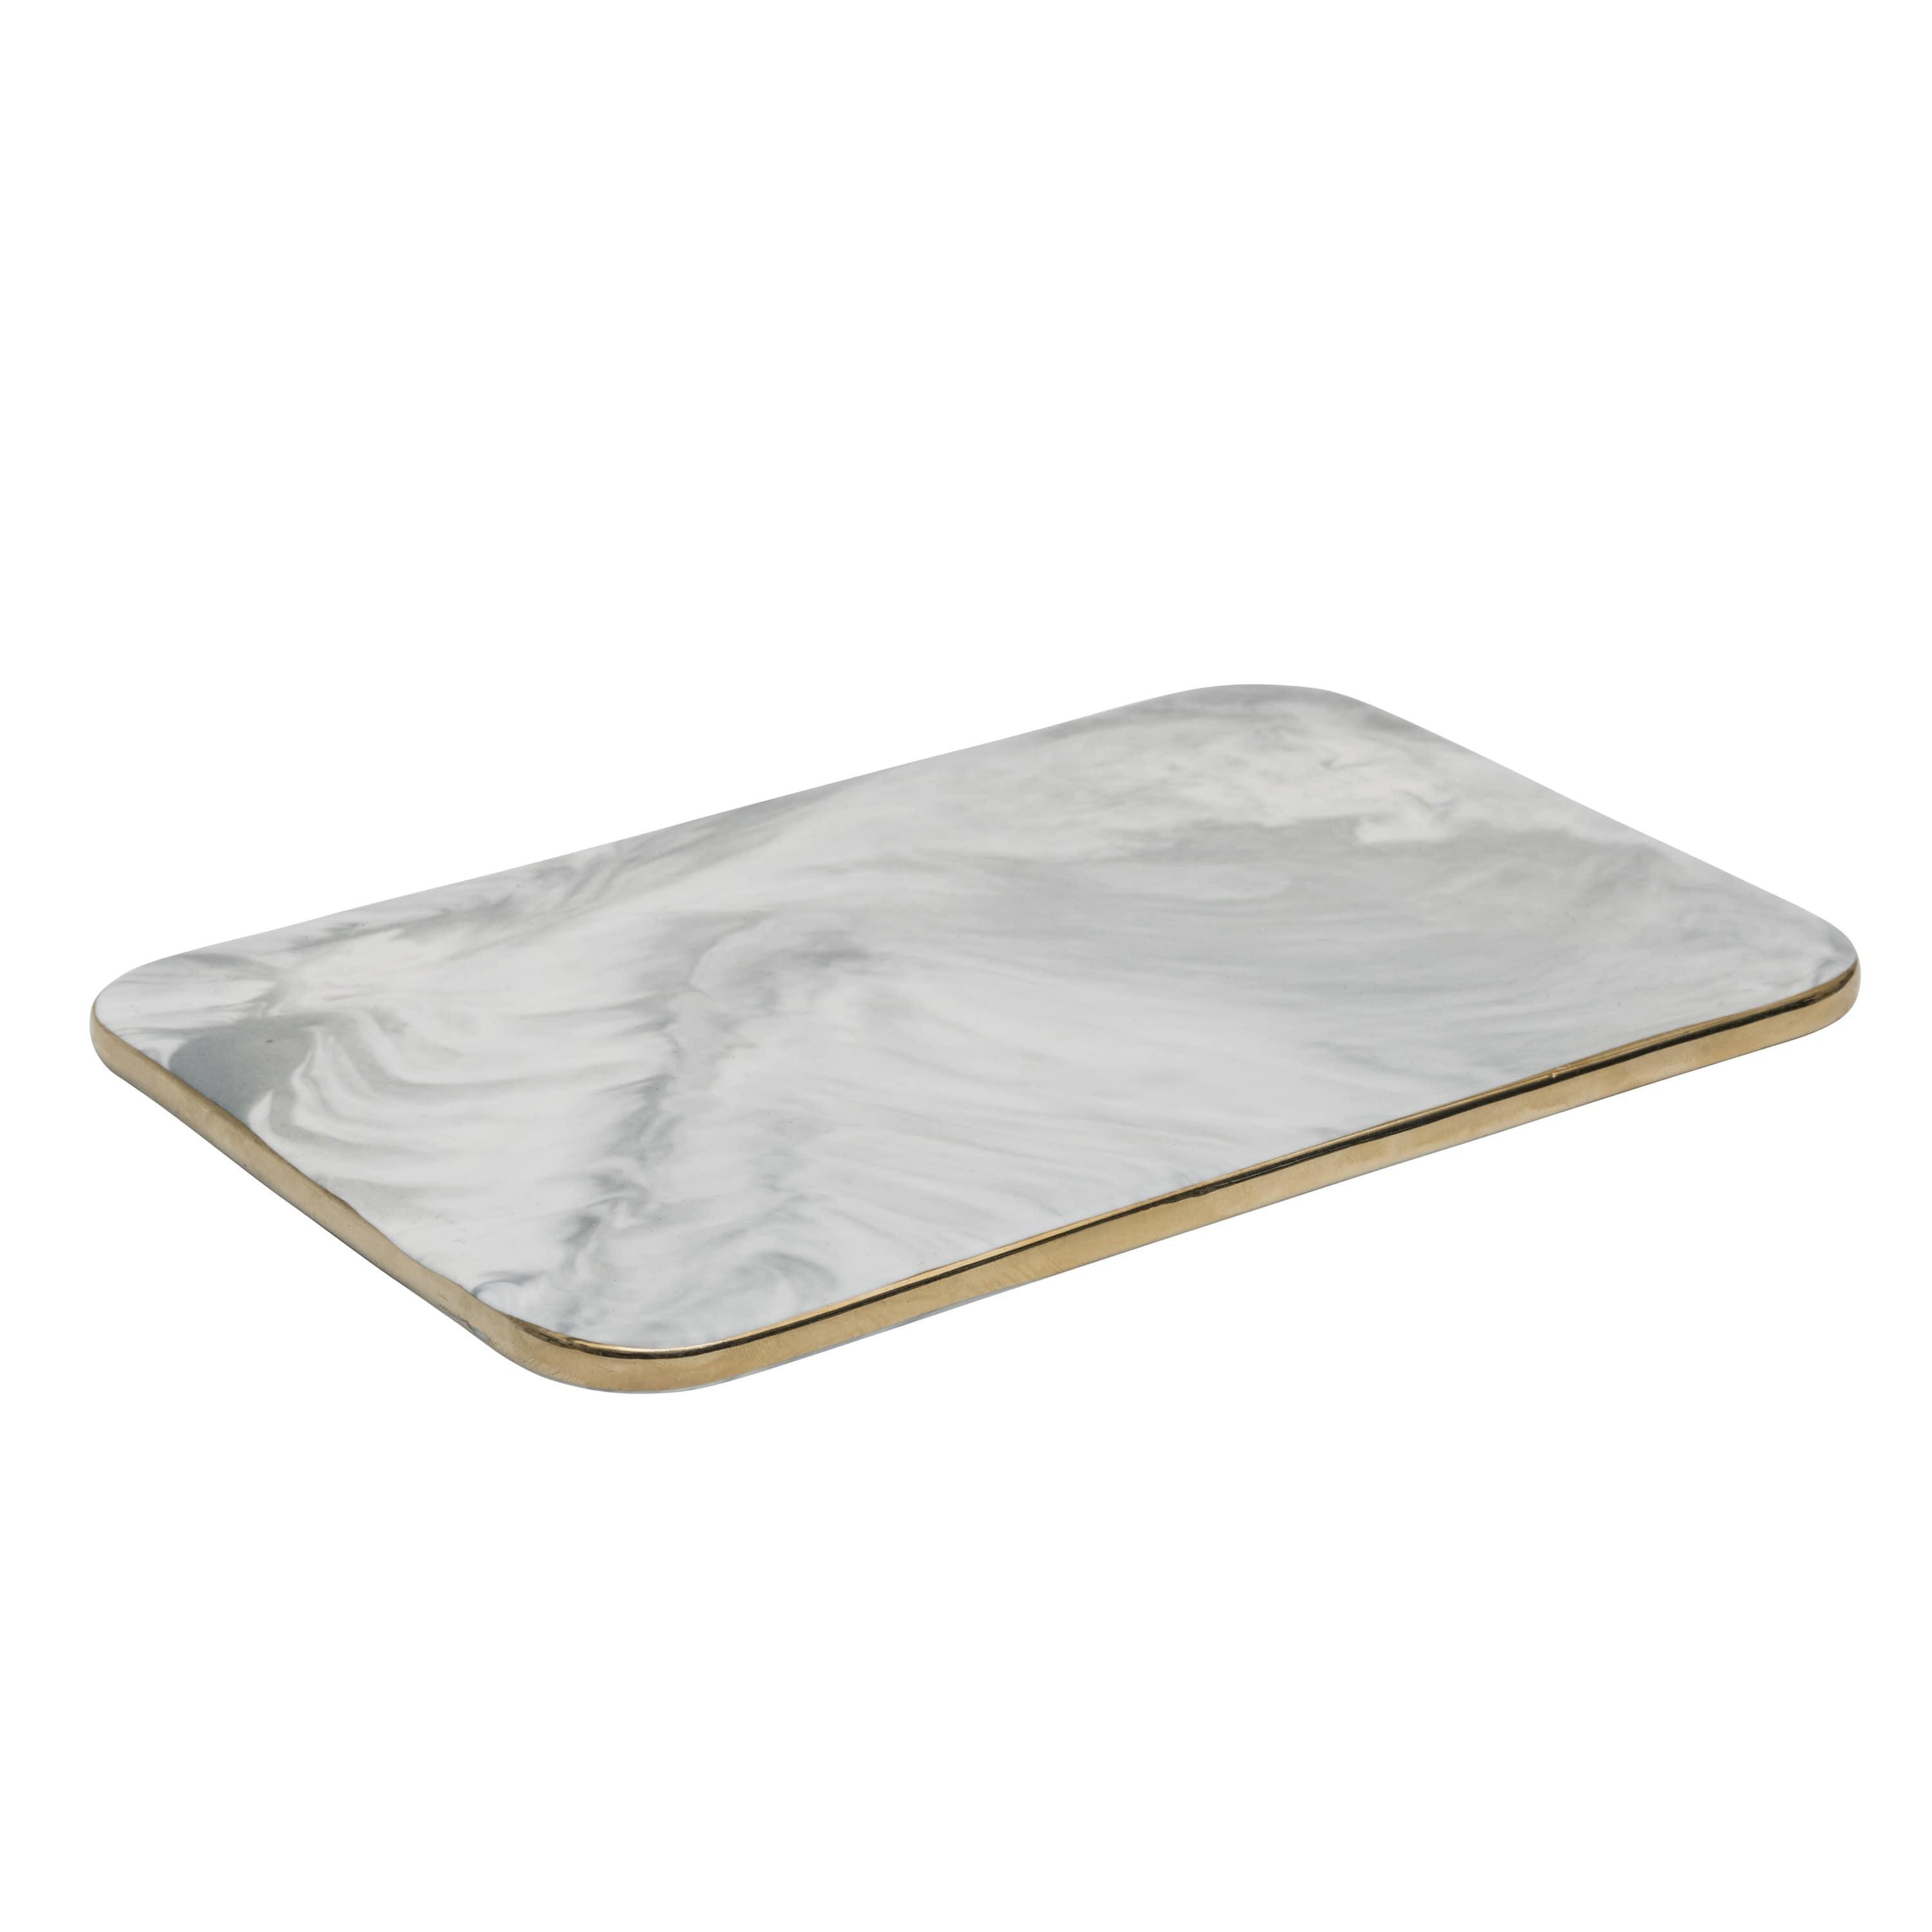 Shop Cutting Board Gold Rim / Large Marble Board Mademoiselle Home Decor